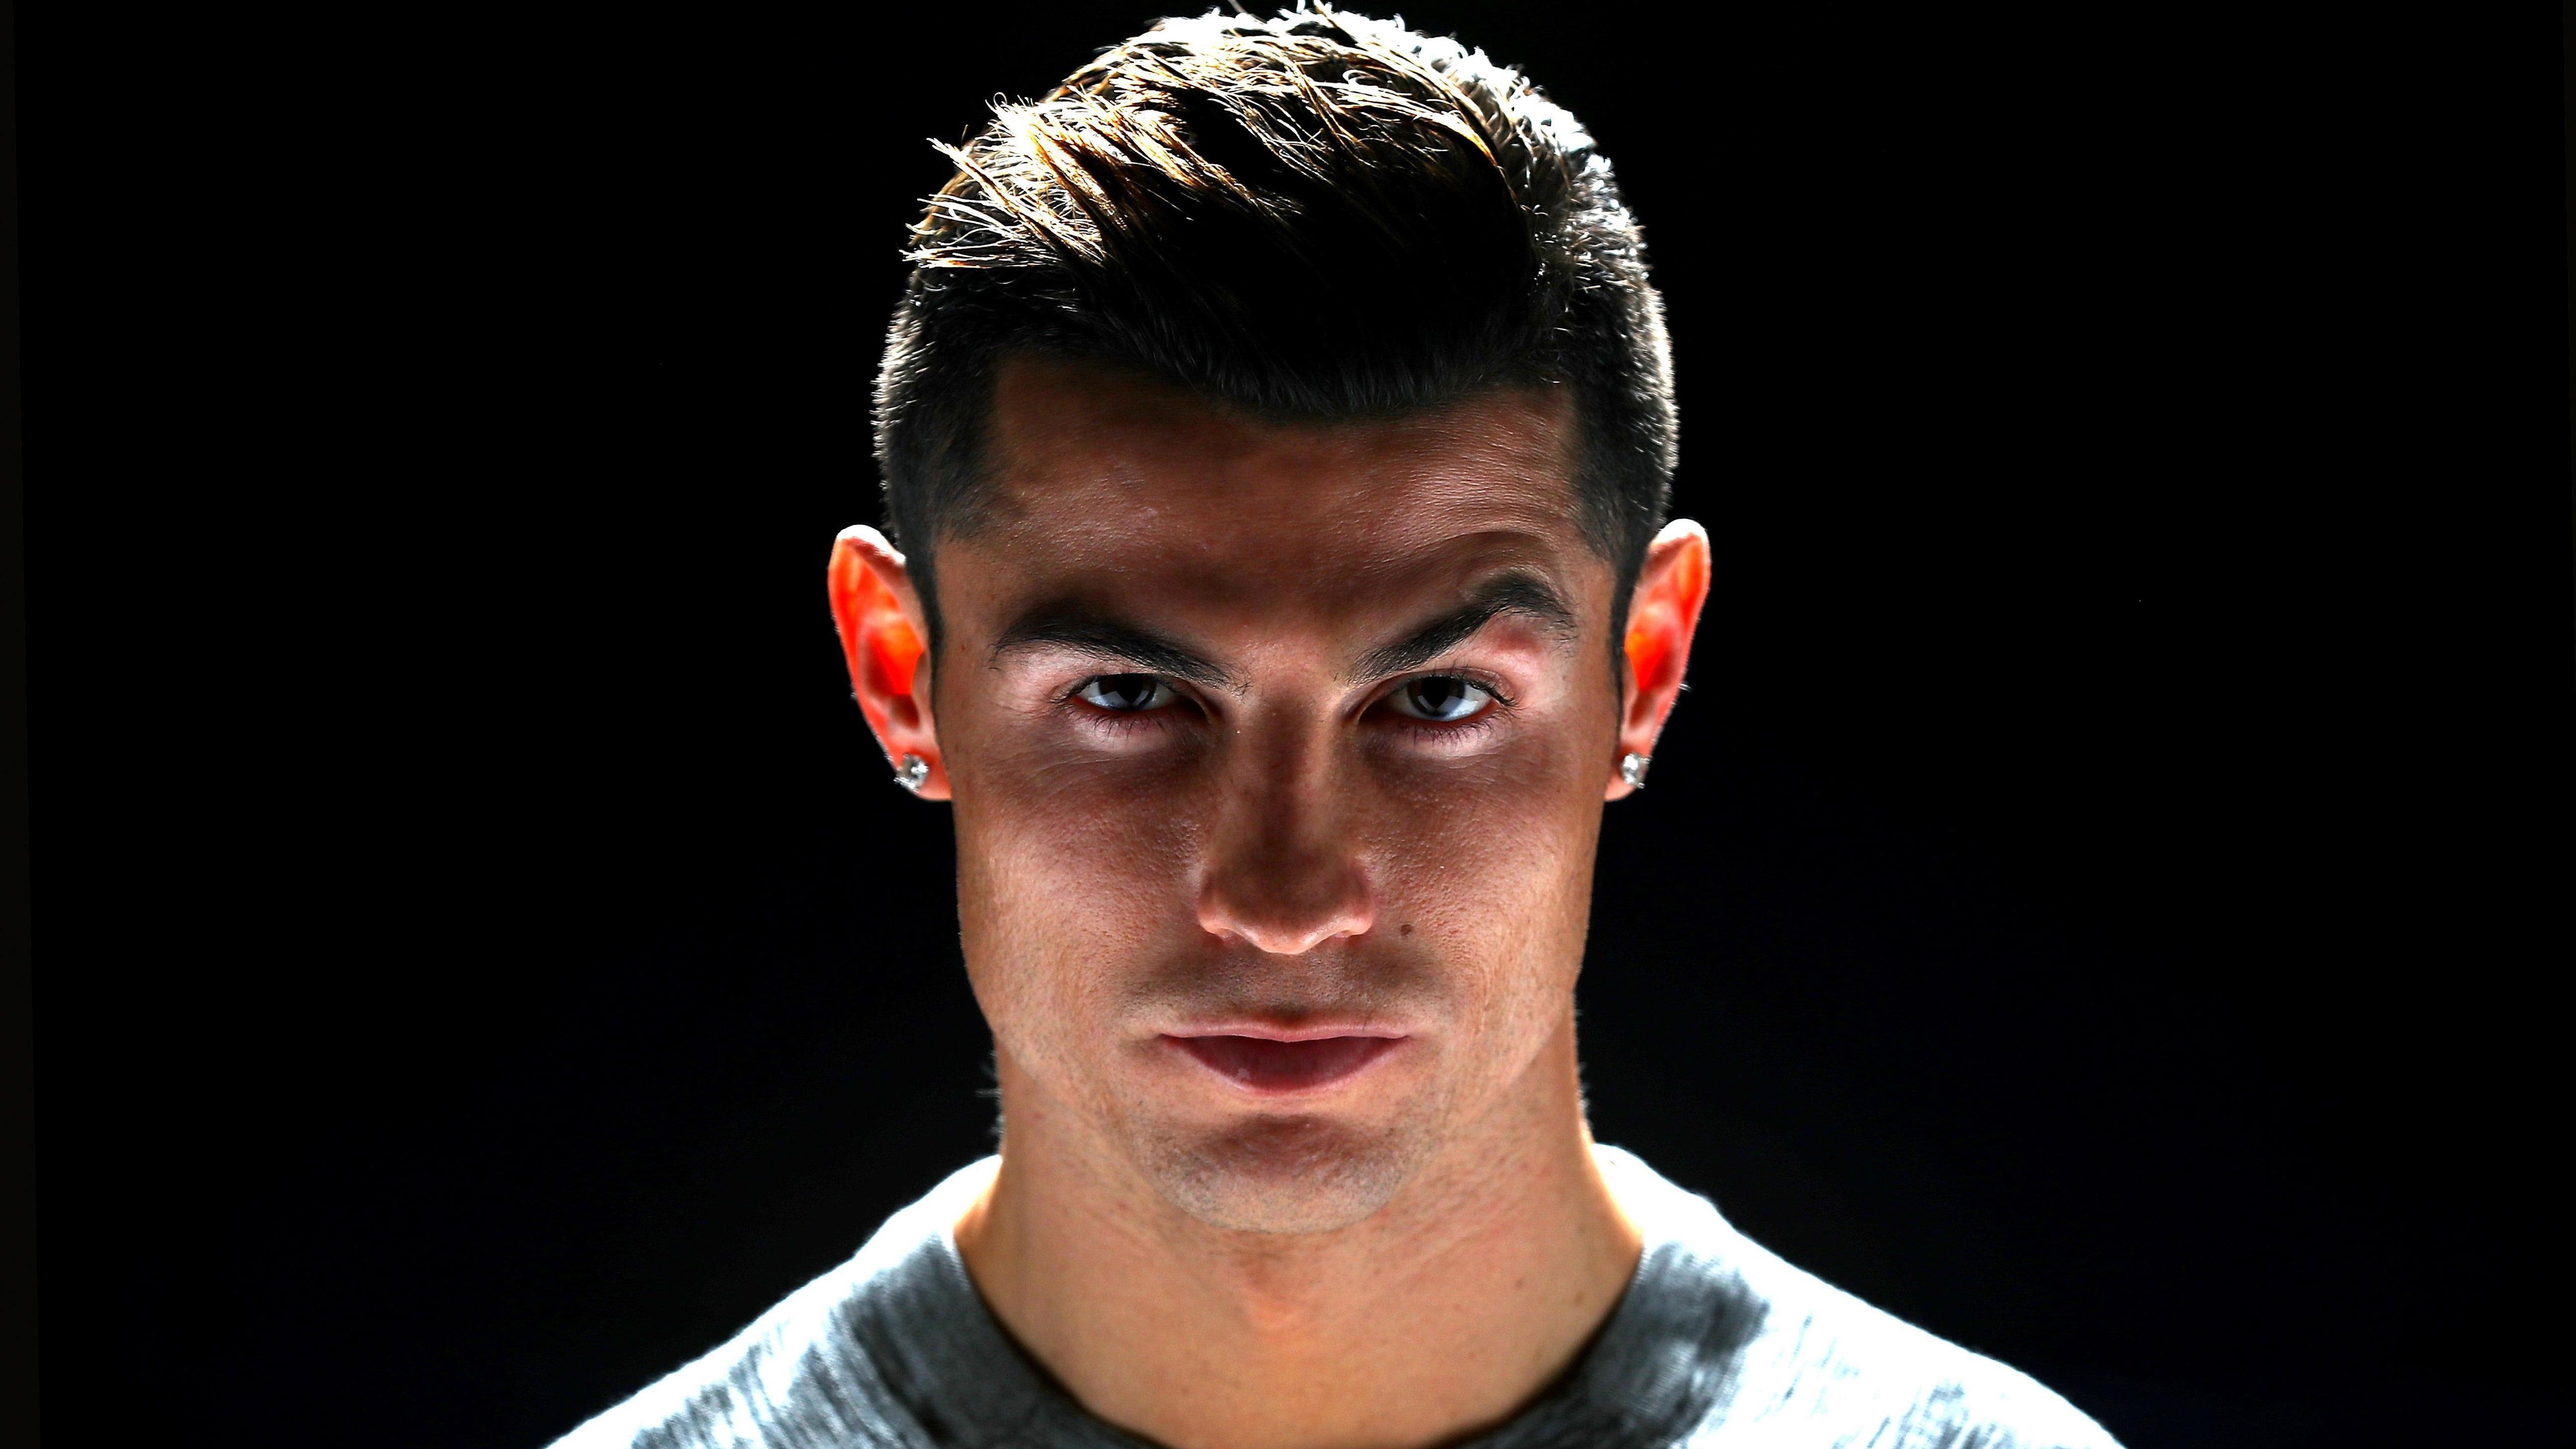 HD wallpaper, Amoled, Cristiano Ronaldo, Portugal Football Player, 5K, Black Background, Face, Portuguese Soccer Player